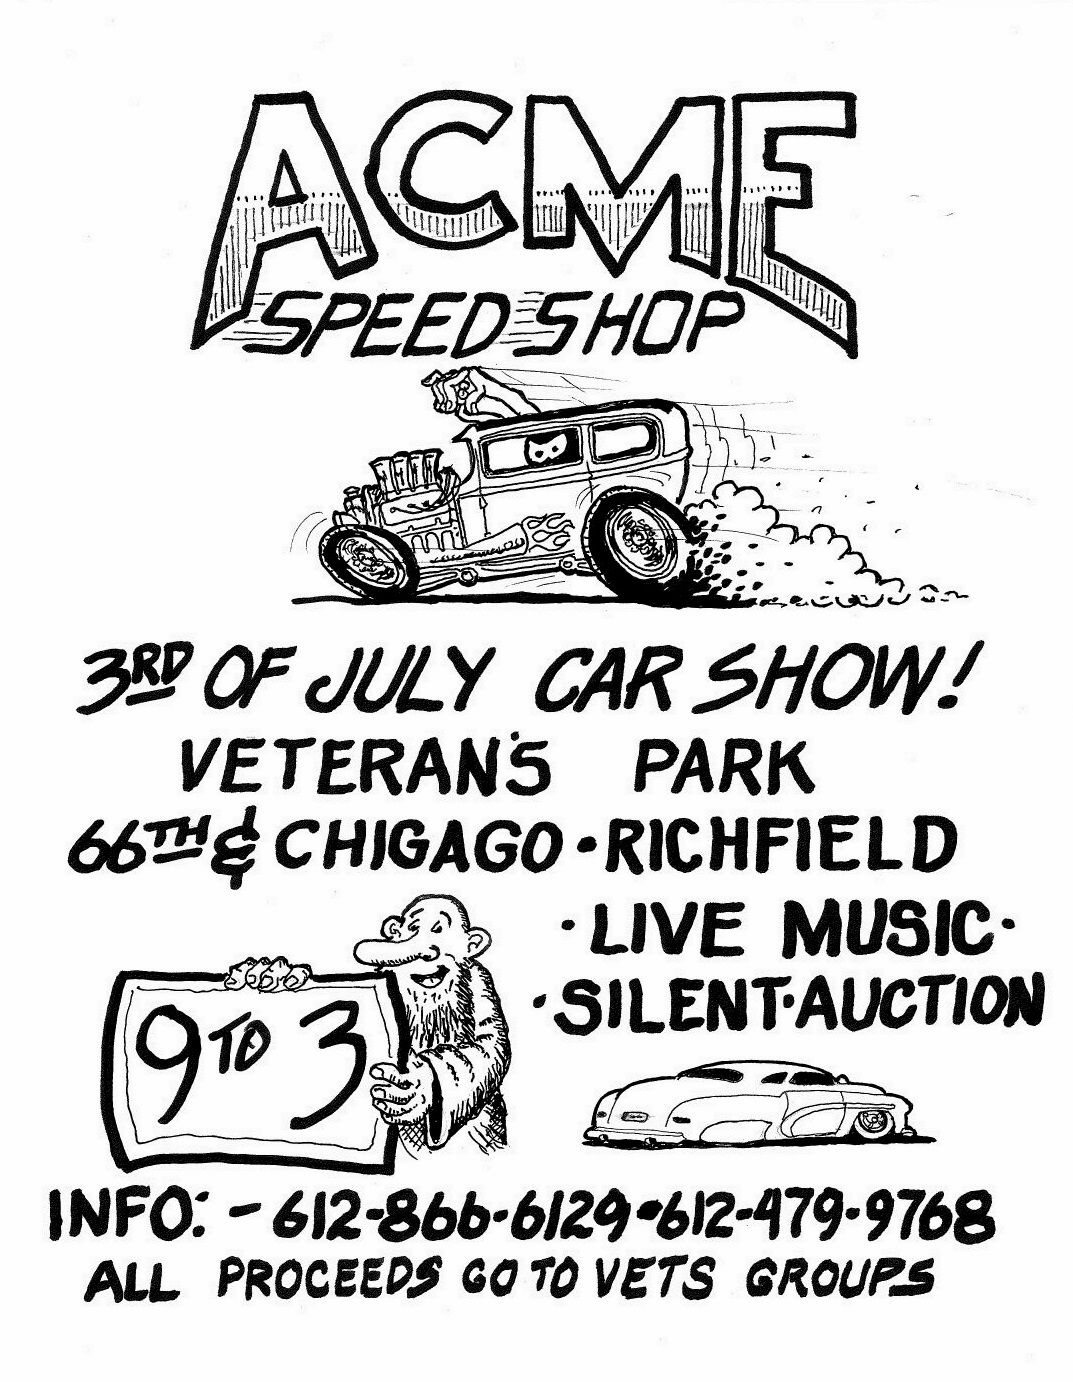 Acme Speedshop July 3RD. Car Show